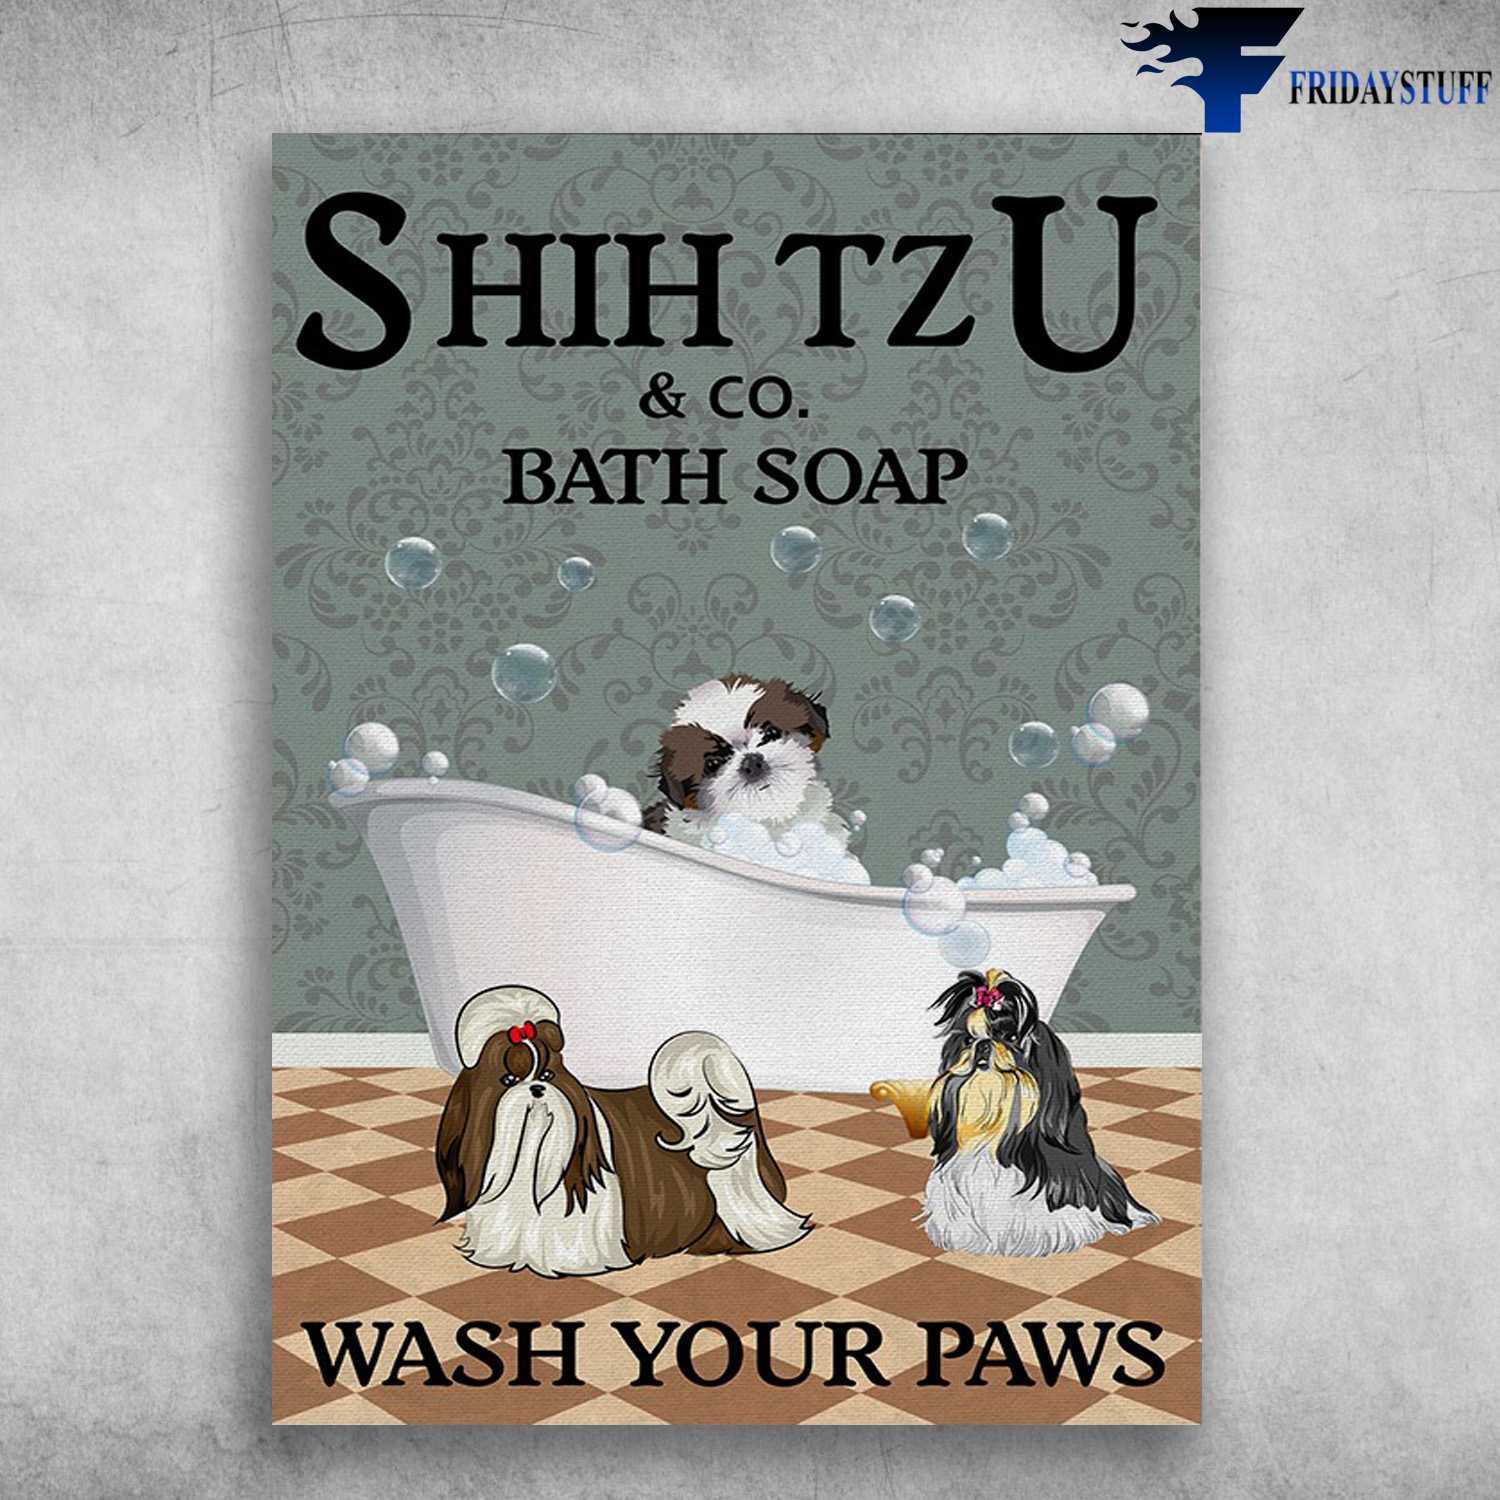 Shih Tzu Dog, Bath Soap - Shih Tzu And CO. Bath Soap, Wash Your PawsShih Tzu Dog, Bath Soap - Shih Tzu And CO. Bath Soap, Wash Your Paws